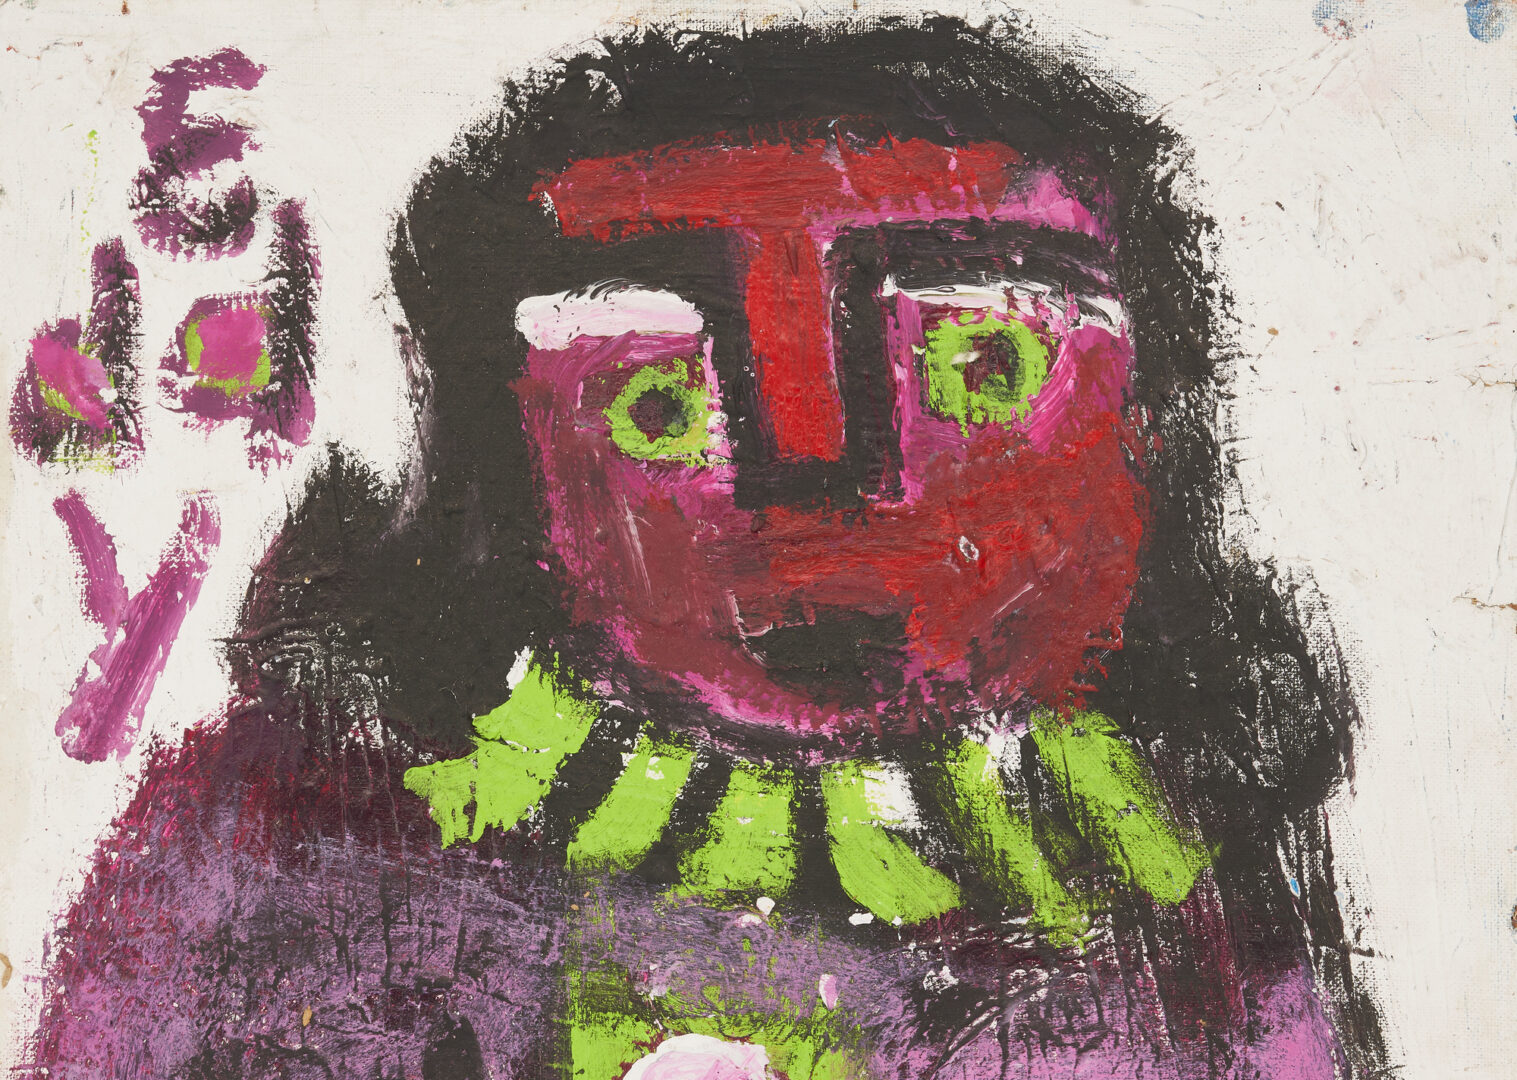 Lot 173: Eddy Mumma Folk Art Painting, Portrait of Figure w/ Red Face